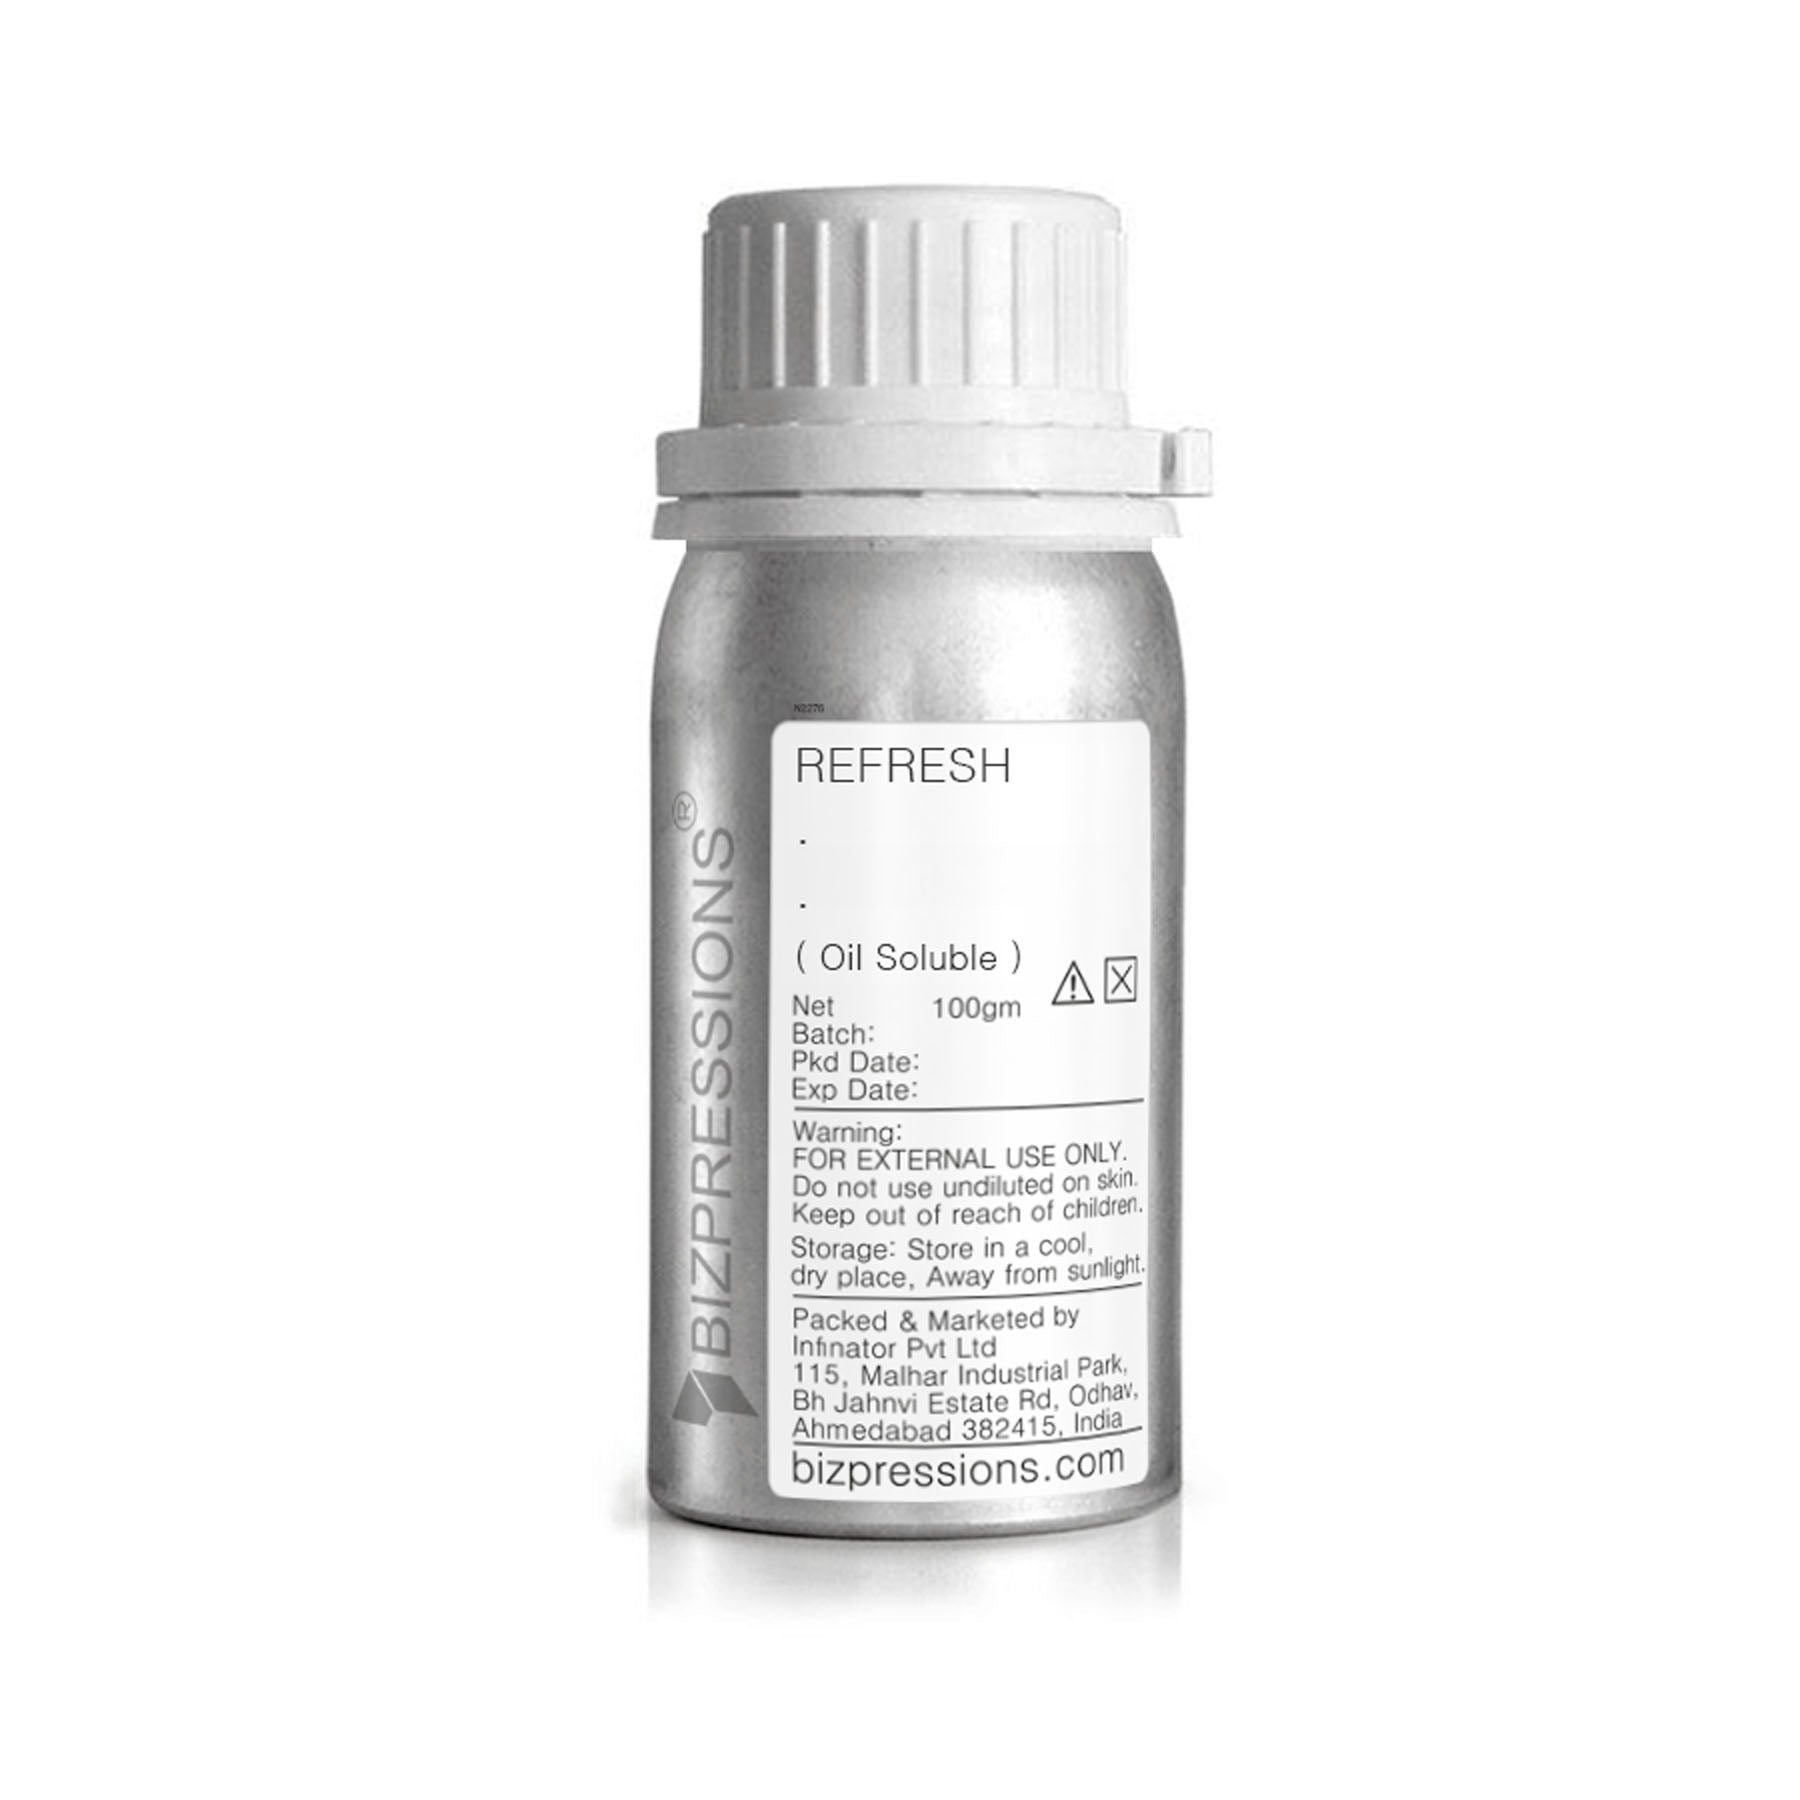 REFRESH - Fragrance ( Oil Soluble ) - 100 gm